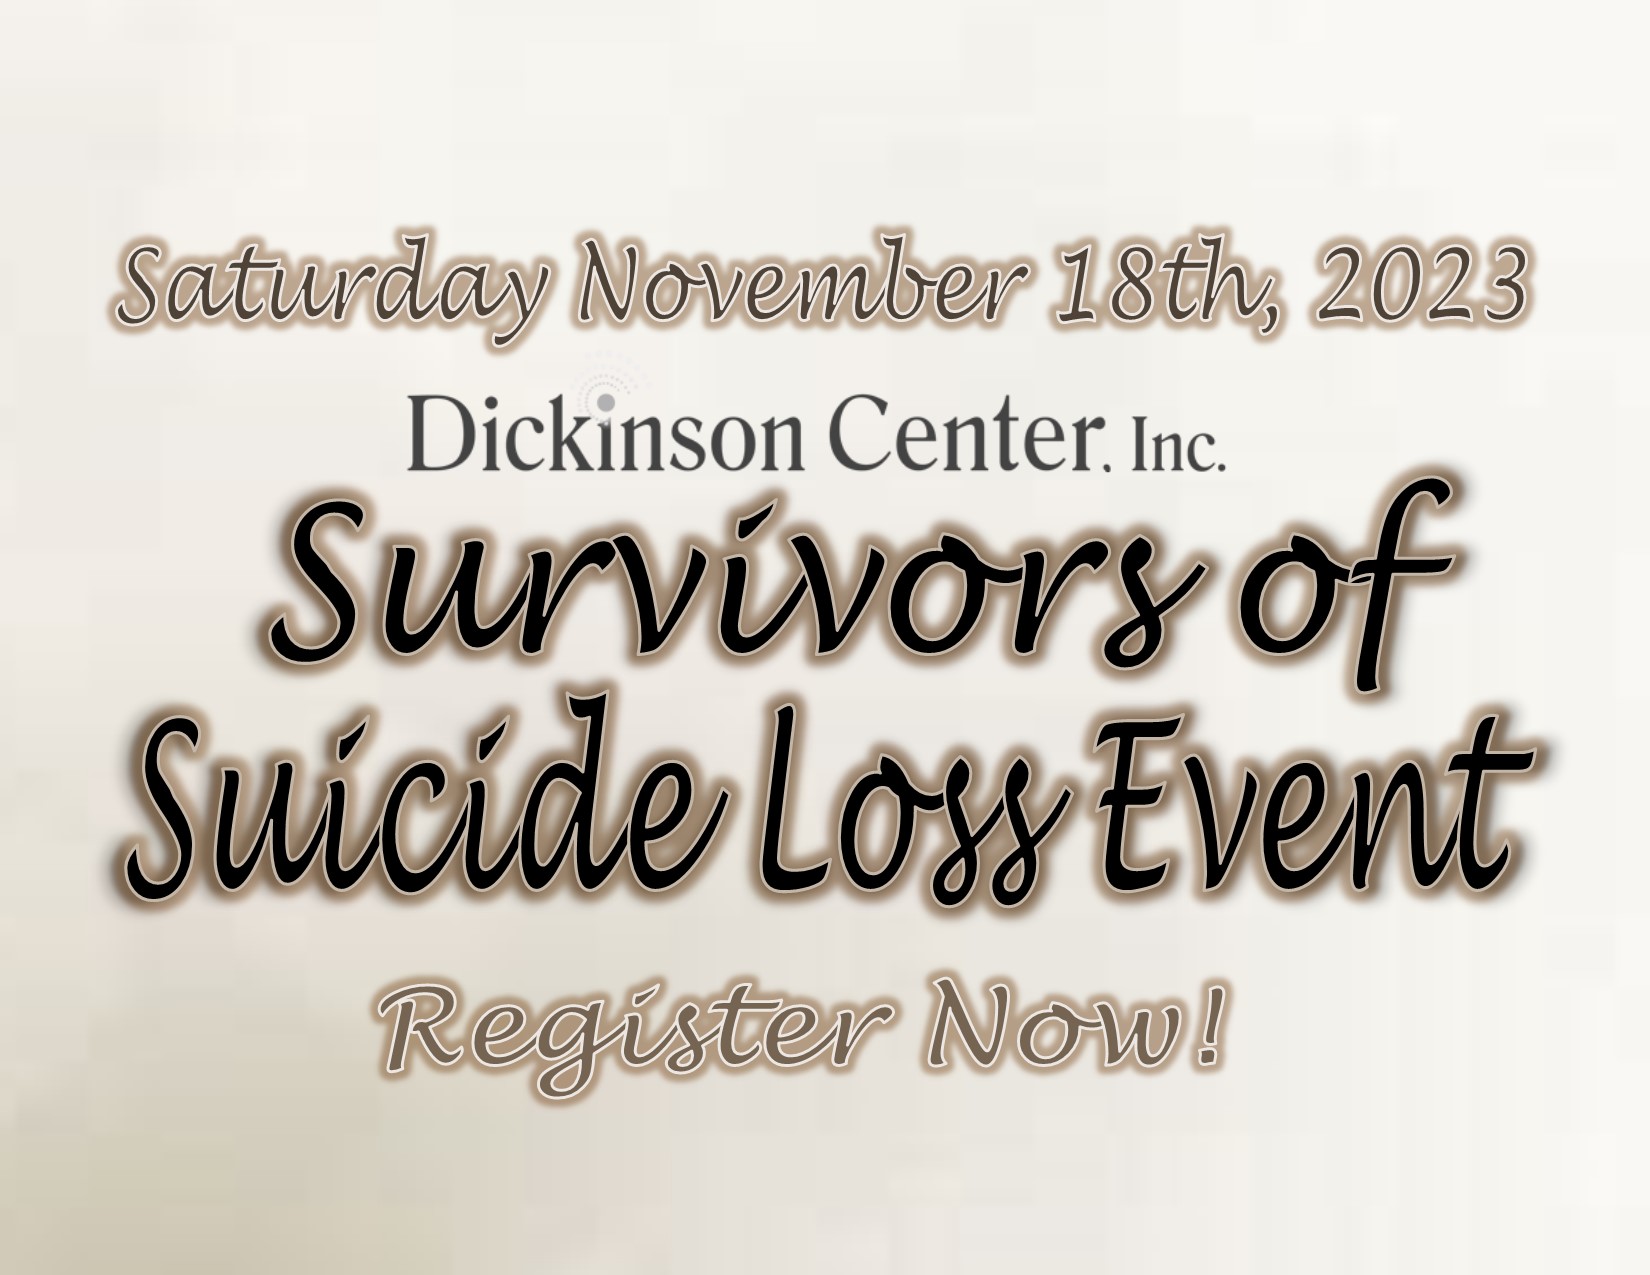 Survivors of Suicide Loss Event Image